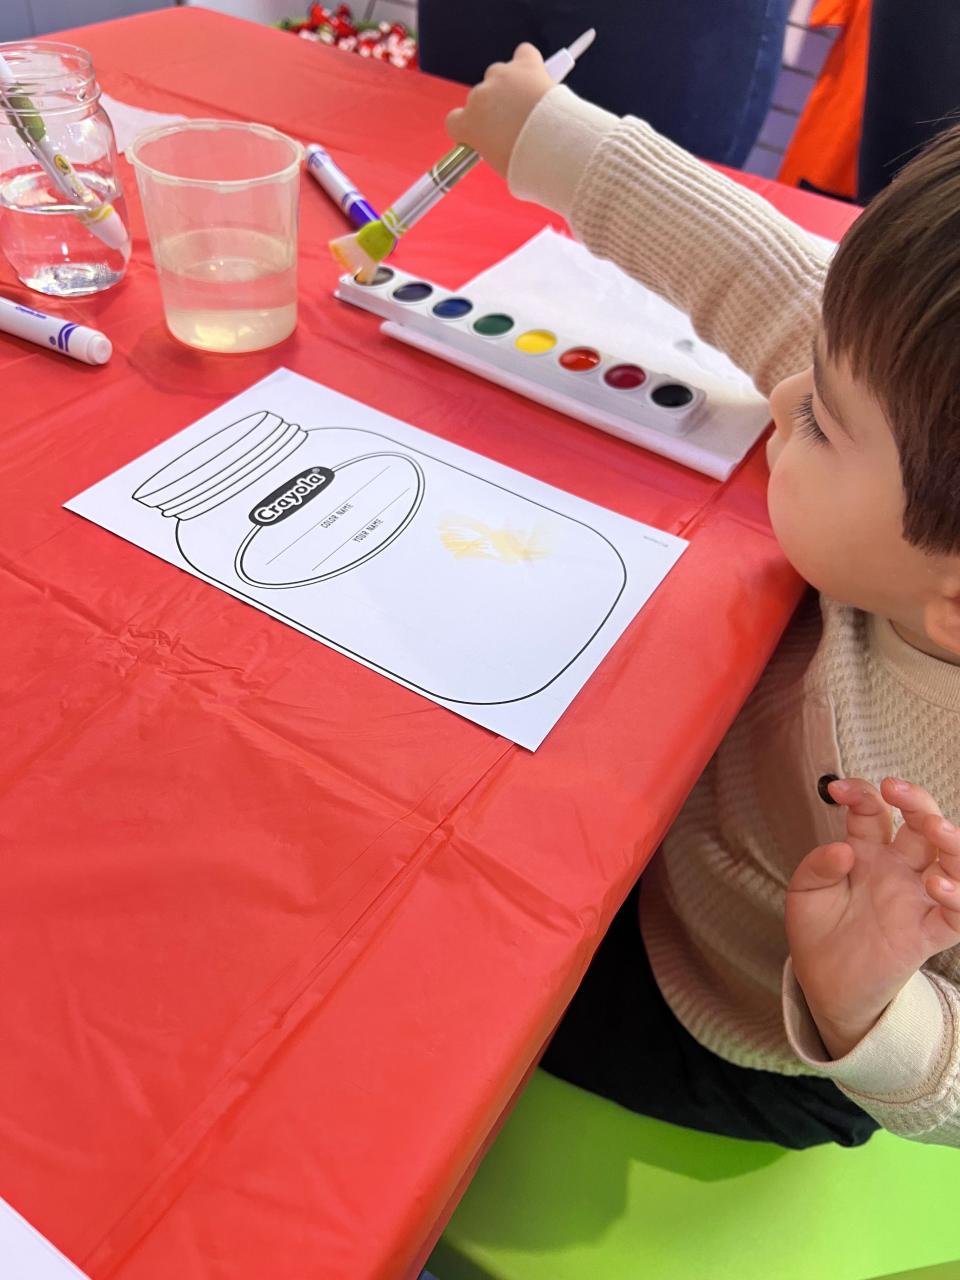 Children participated in art activities related to the book “Crayola: Ellie’s Crayon Adventure.” (Crayola Experience Orlando)